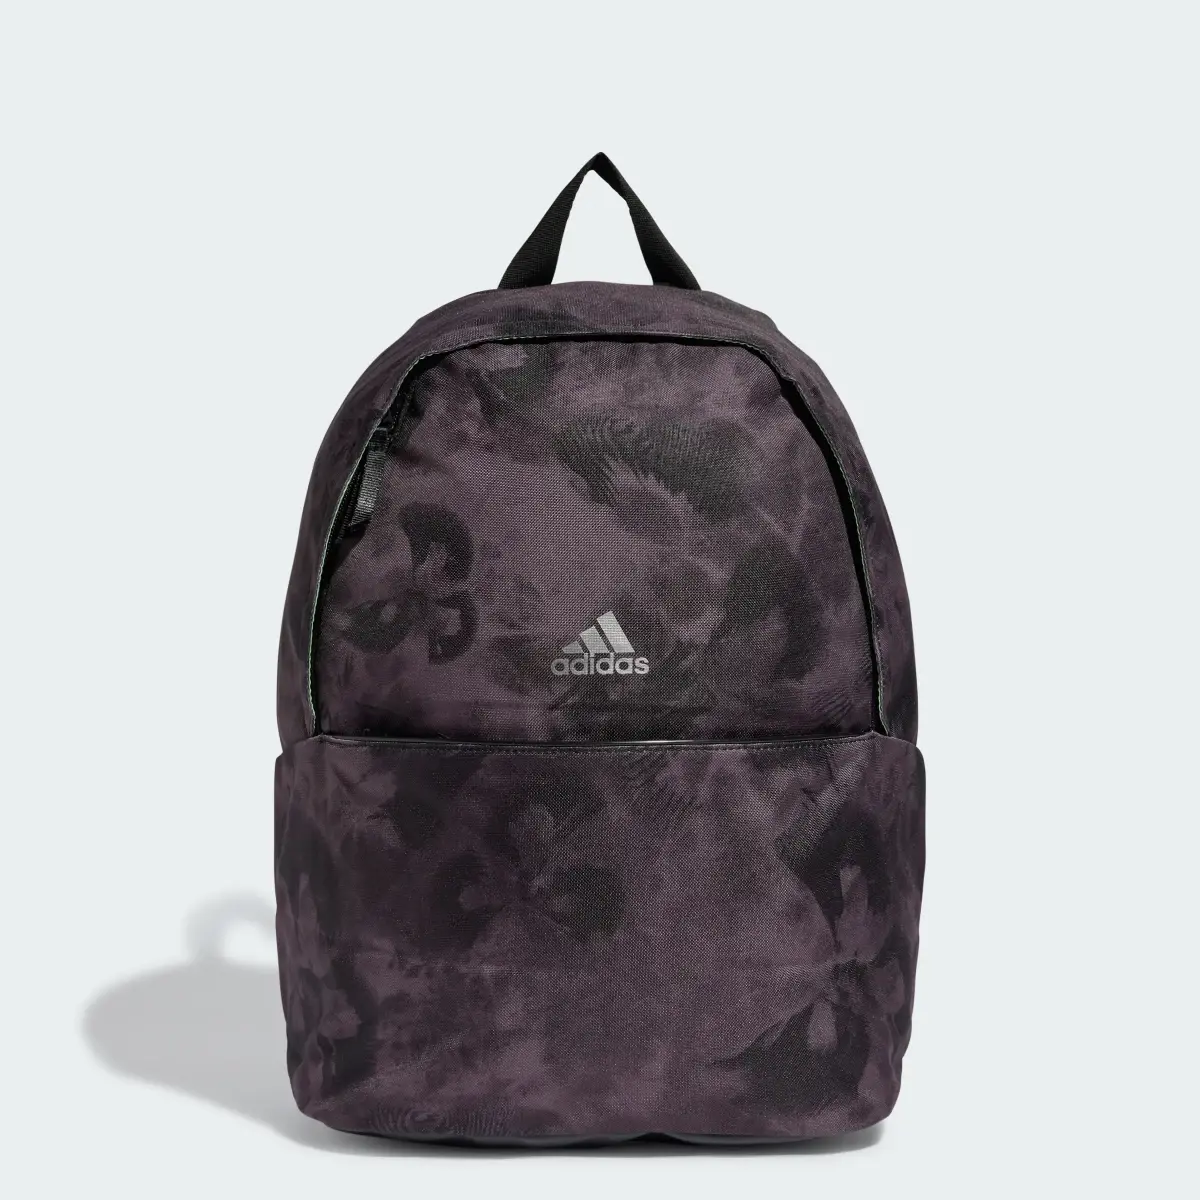 Adidas Gym Backpack. 1